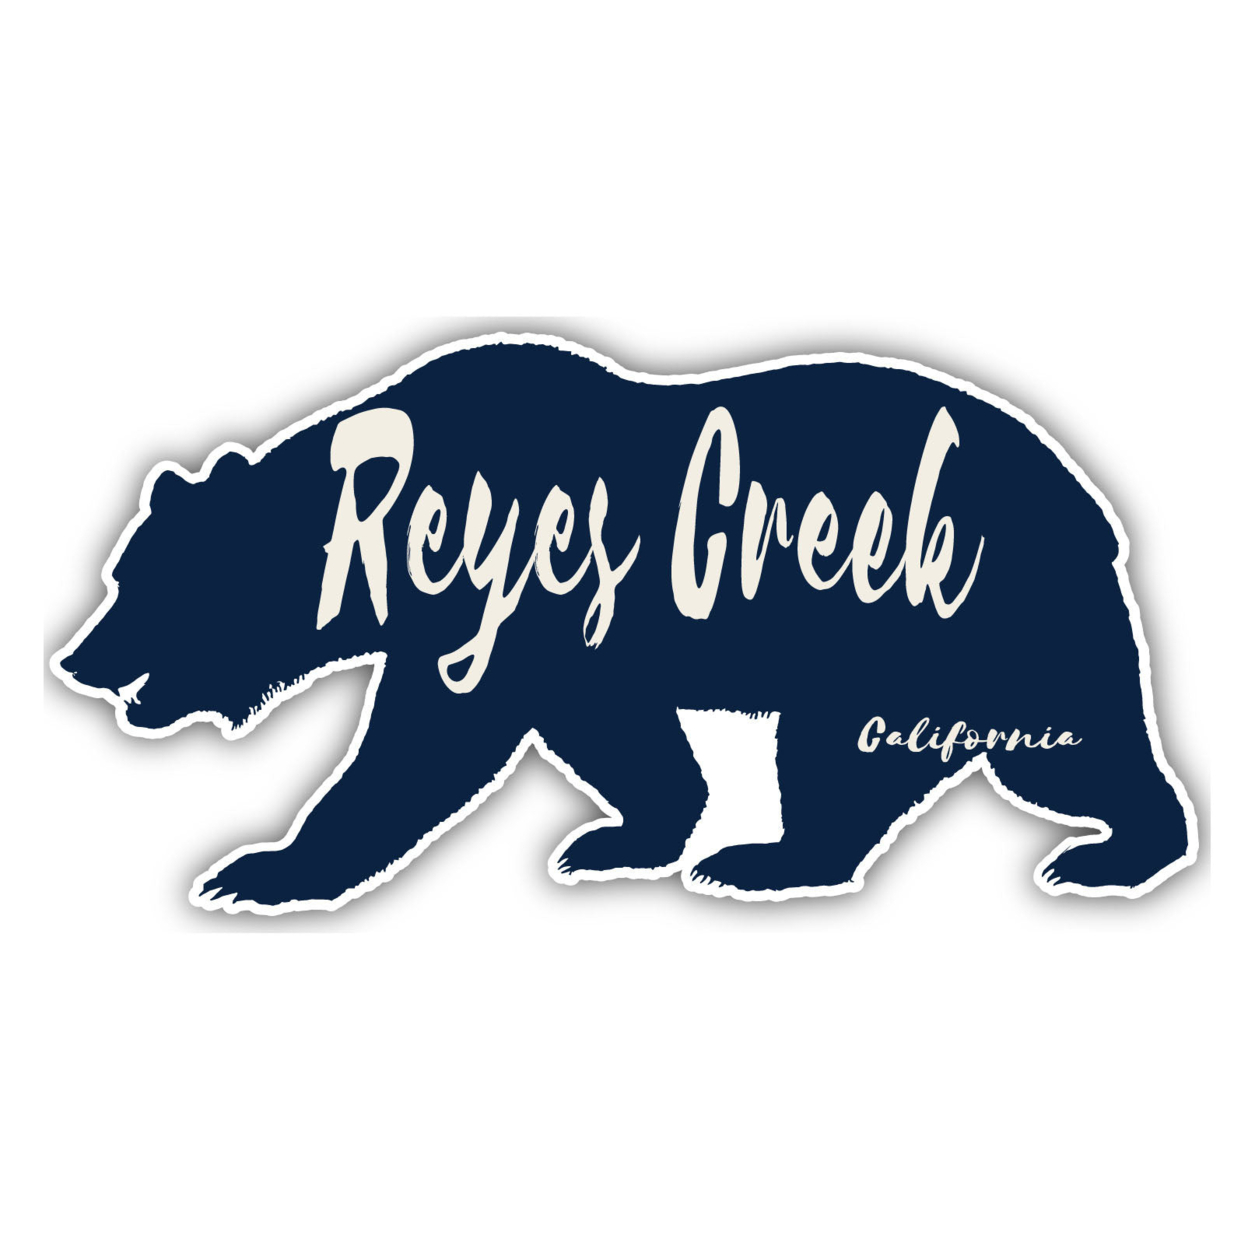 Reyes Creek California Souvenir Decorative Stickers (Choose Theme And Size) - Single Unit, 4-Inch, Bear